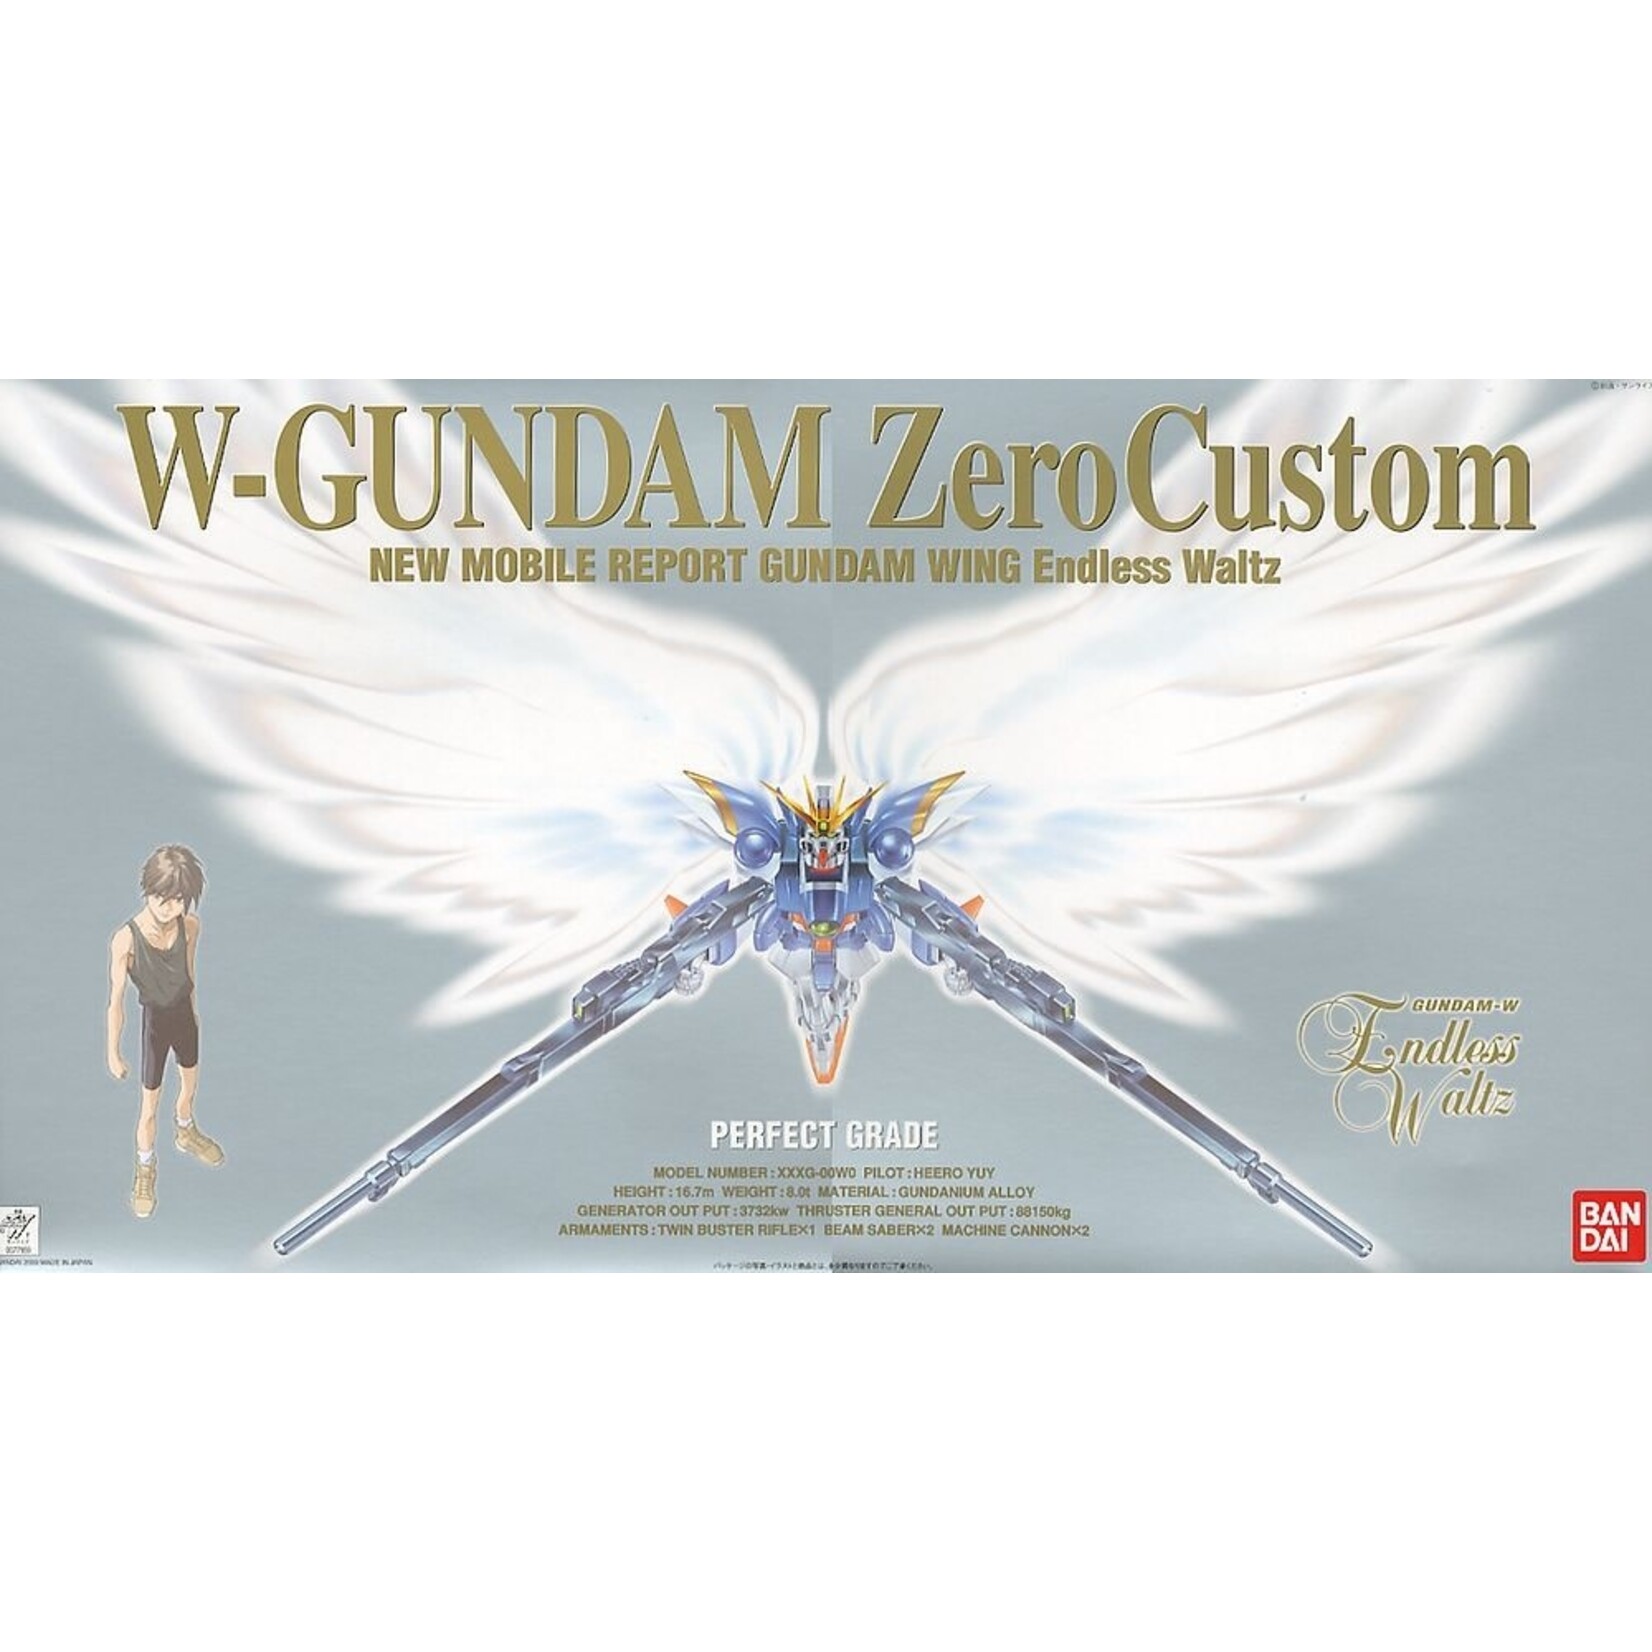 Bandai Bandai 1077659 PG Wing Gundam Zero (EW), "Gundam Wing: Endless Waltz"